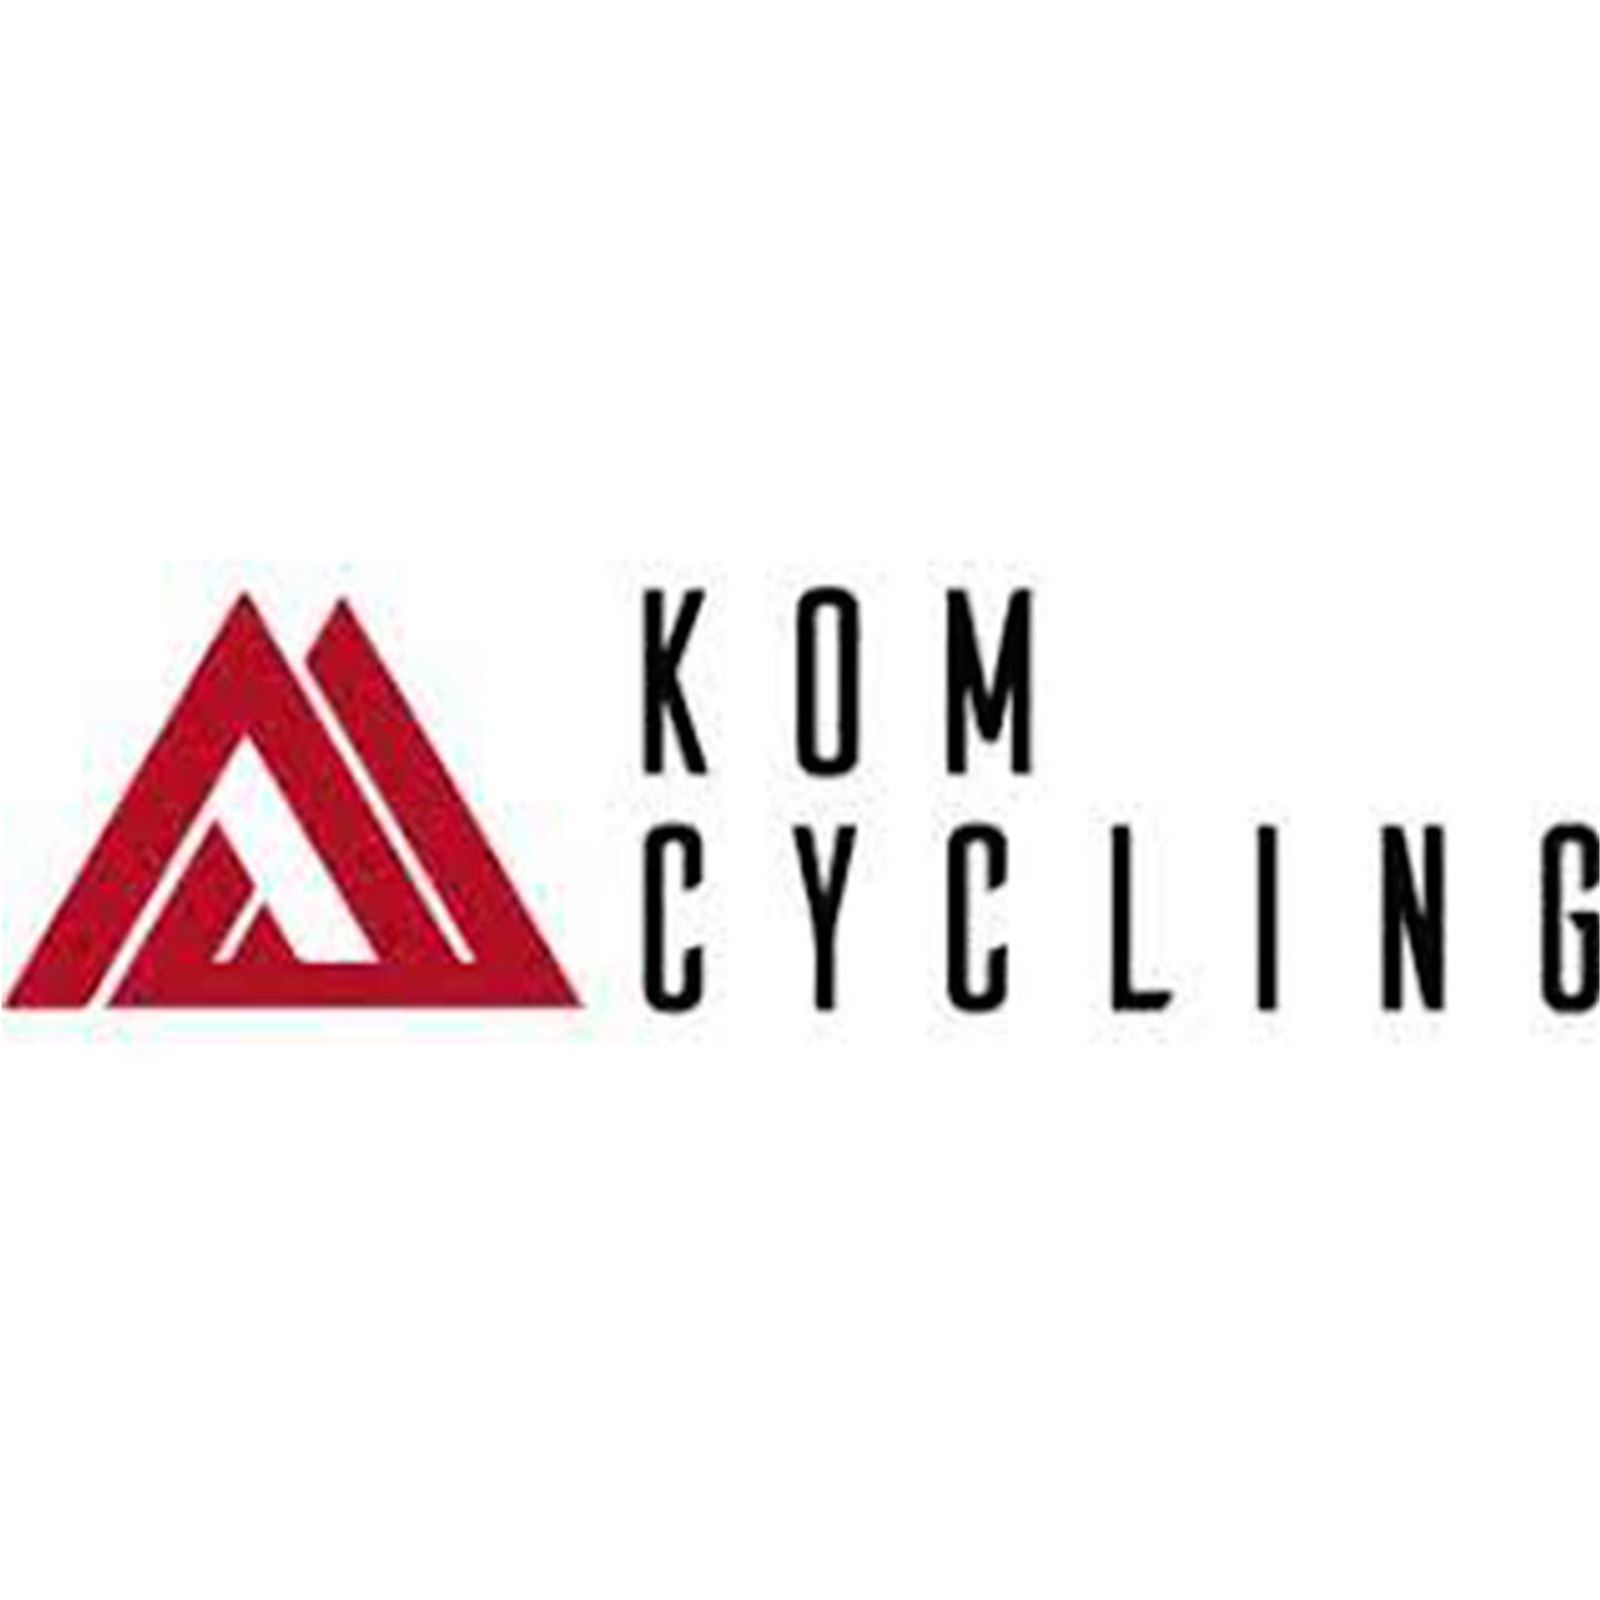 KOM CYCLING